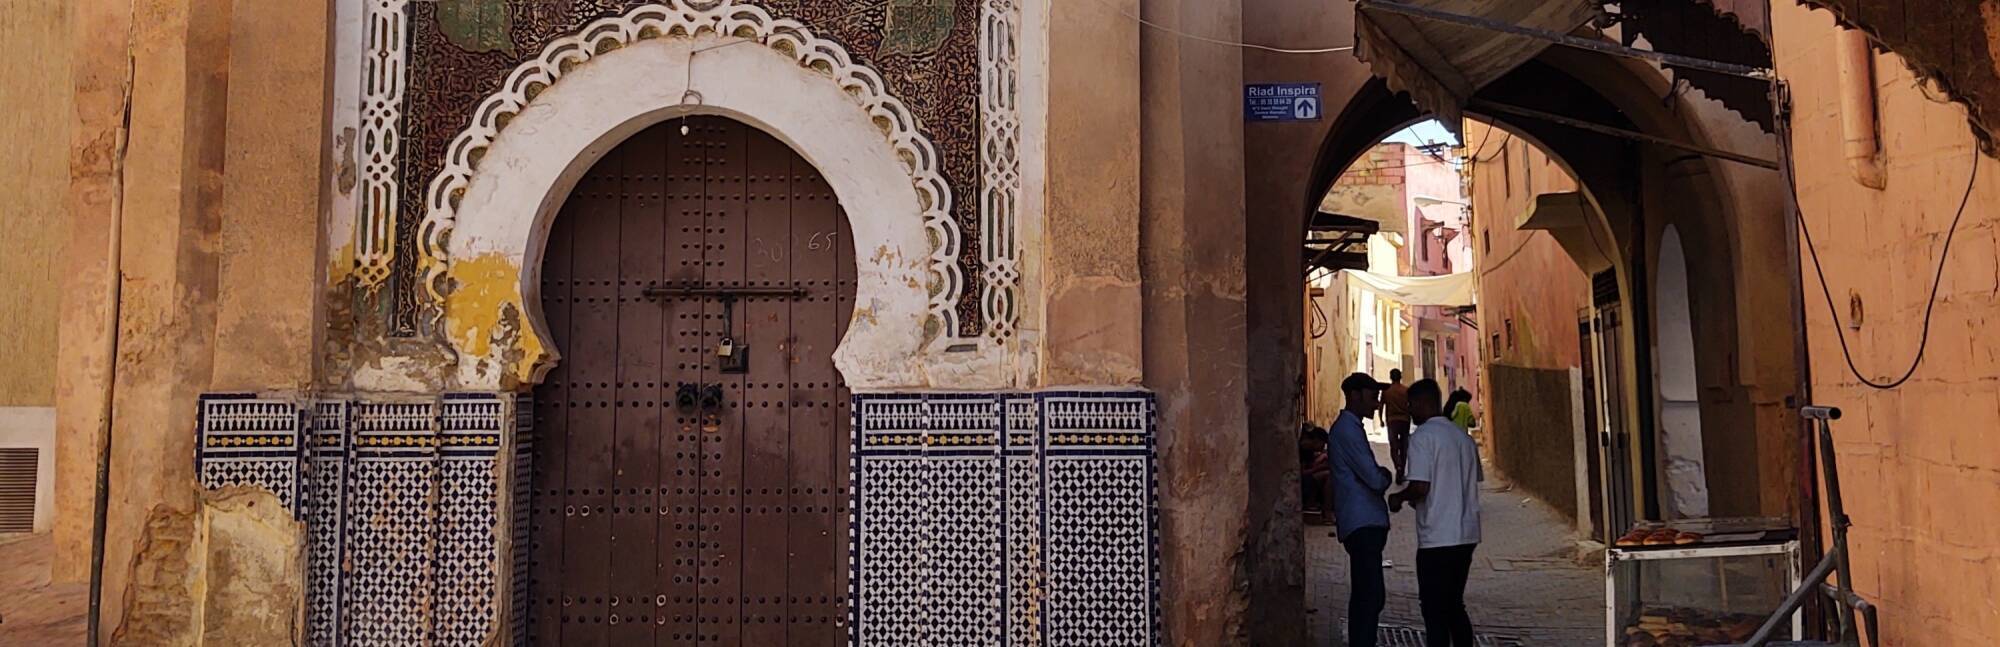 Two men talk in a narrow passage through the medina in Meknès.